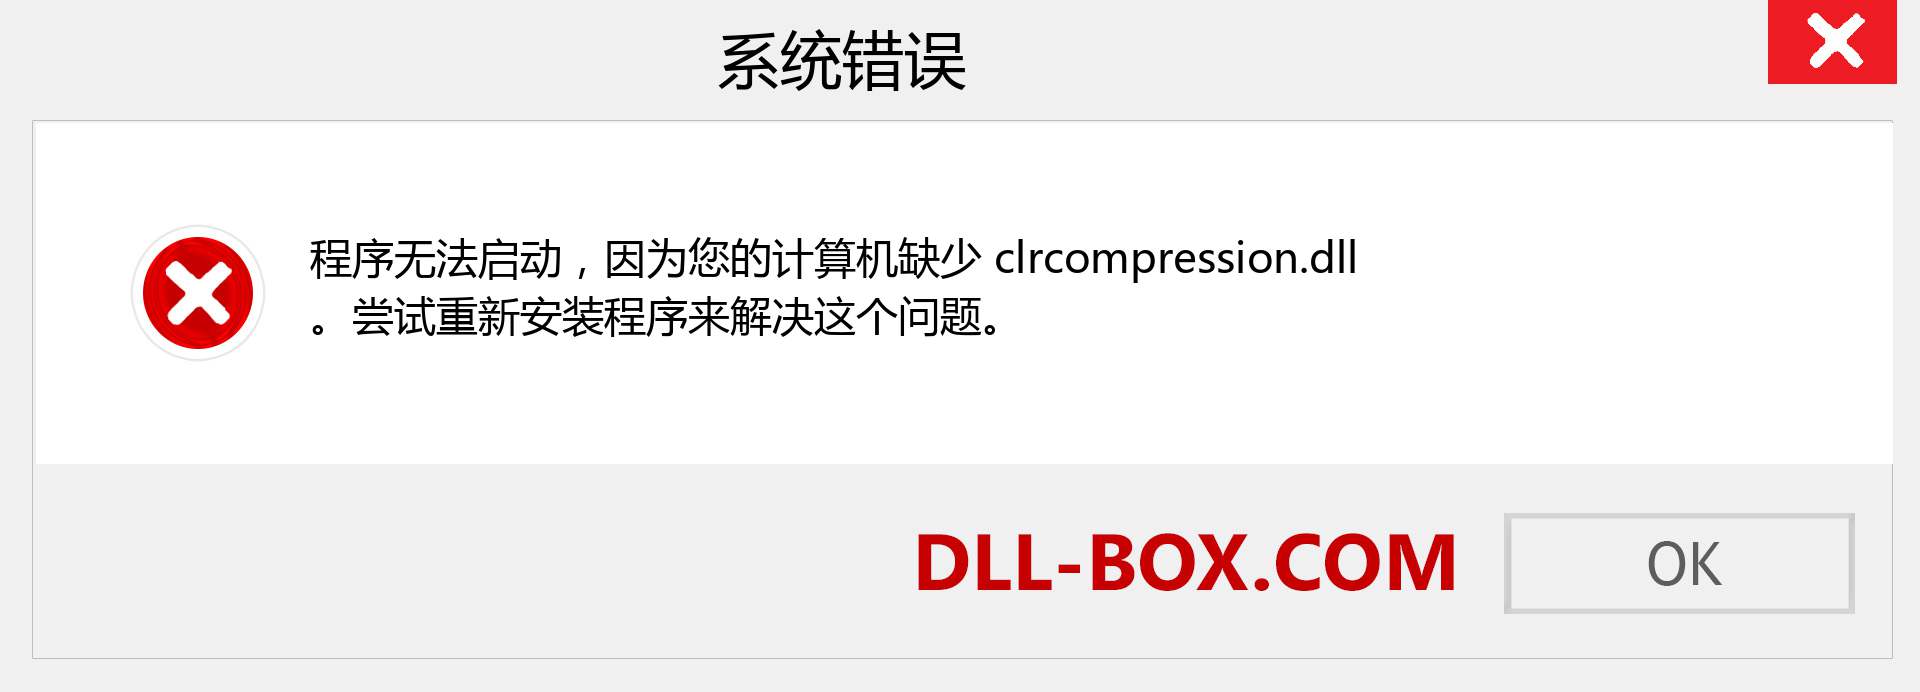 clrcompression.dll 文件丢失？。 适用于 Windows 7、8、10 的下载 - 修复 Windows、照片、图像上的 clrcompression dll 丢失错误